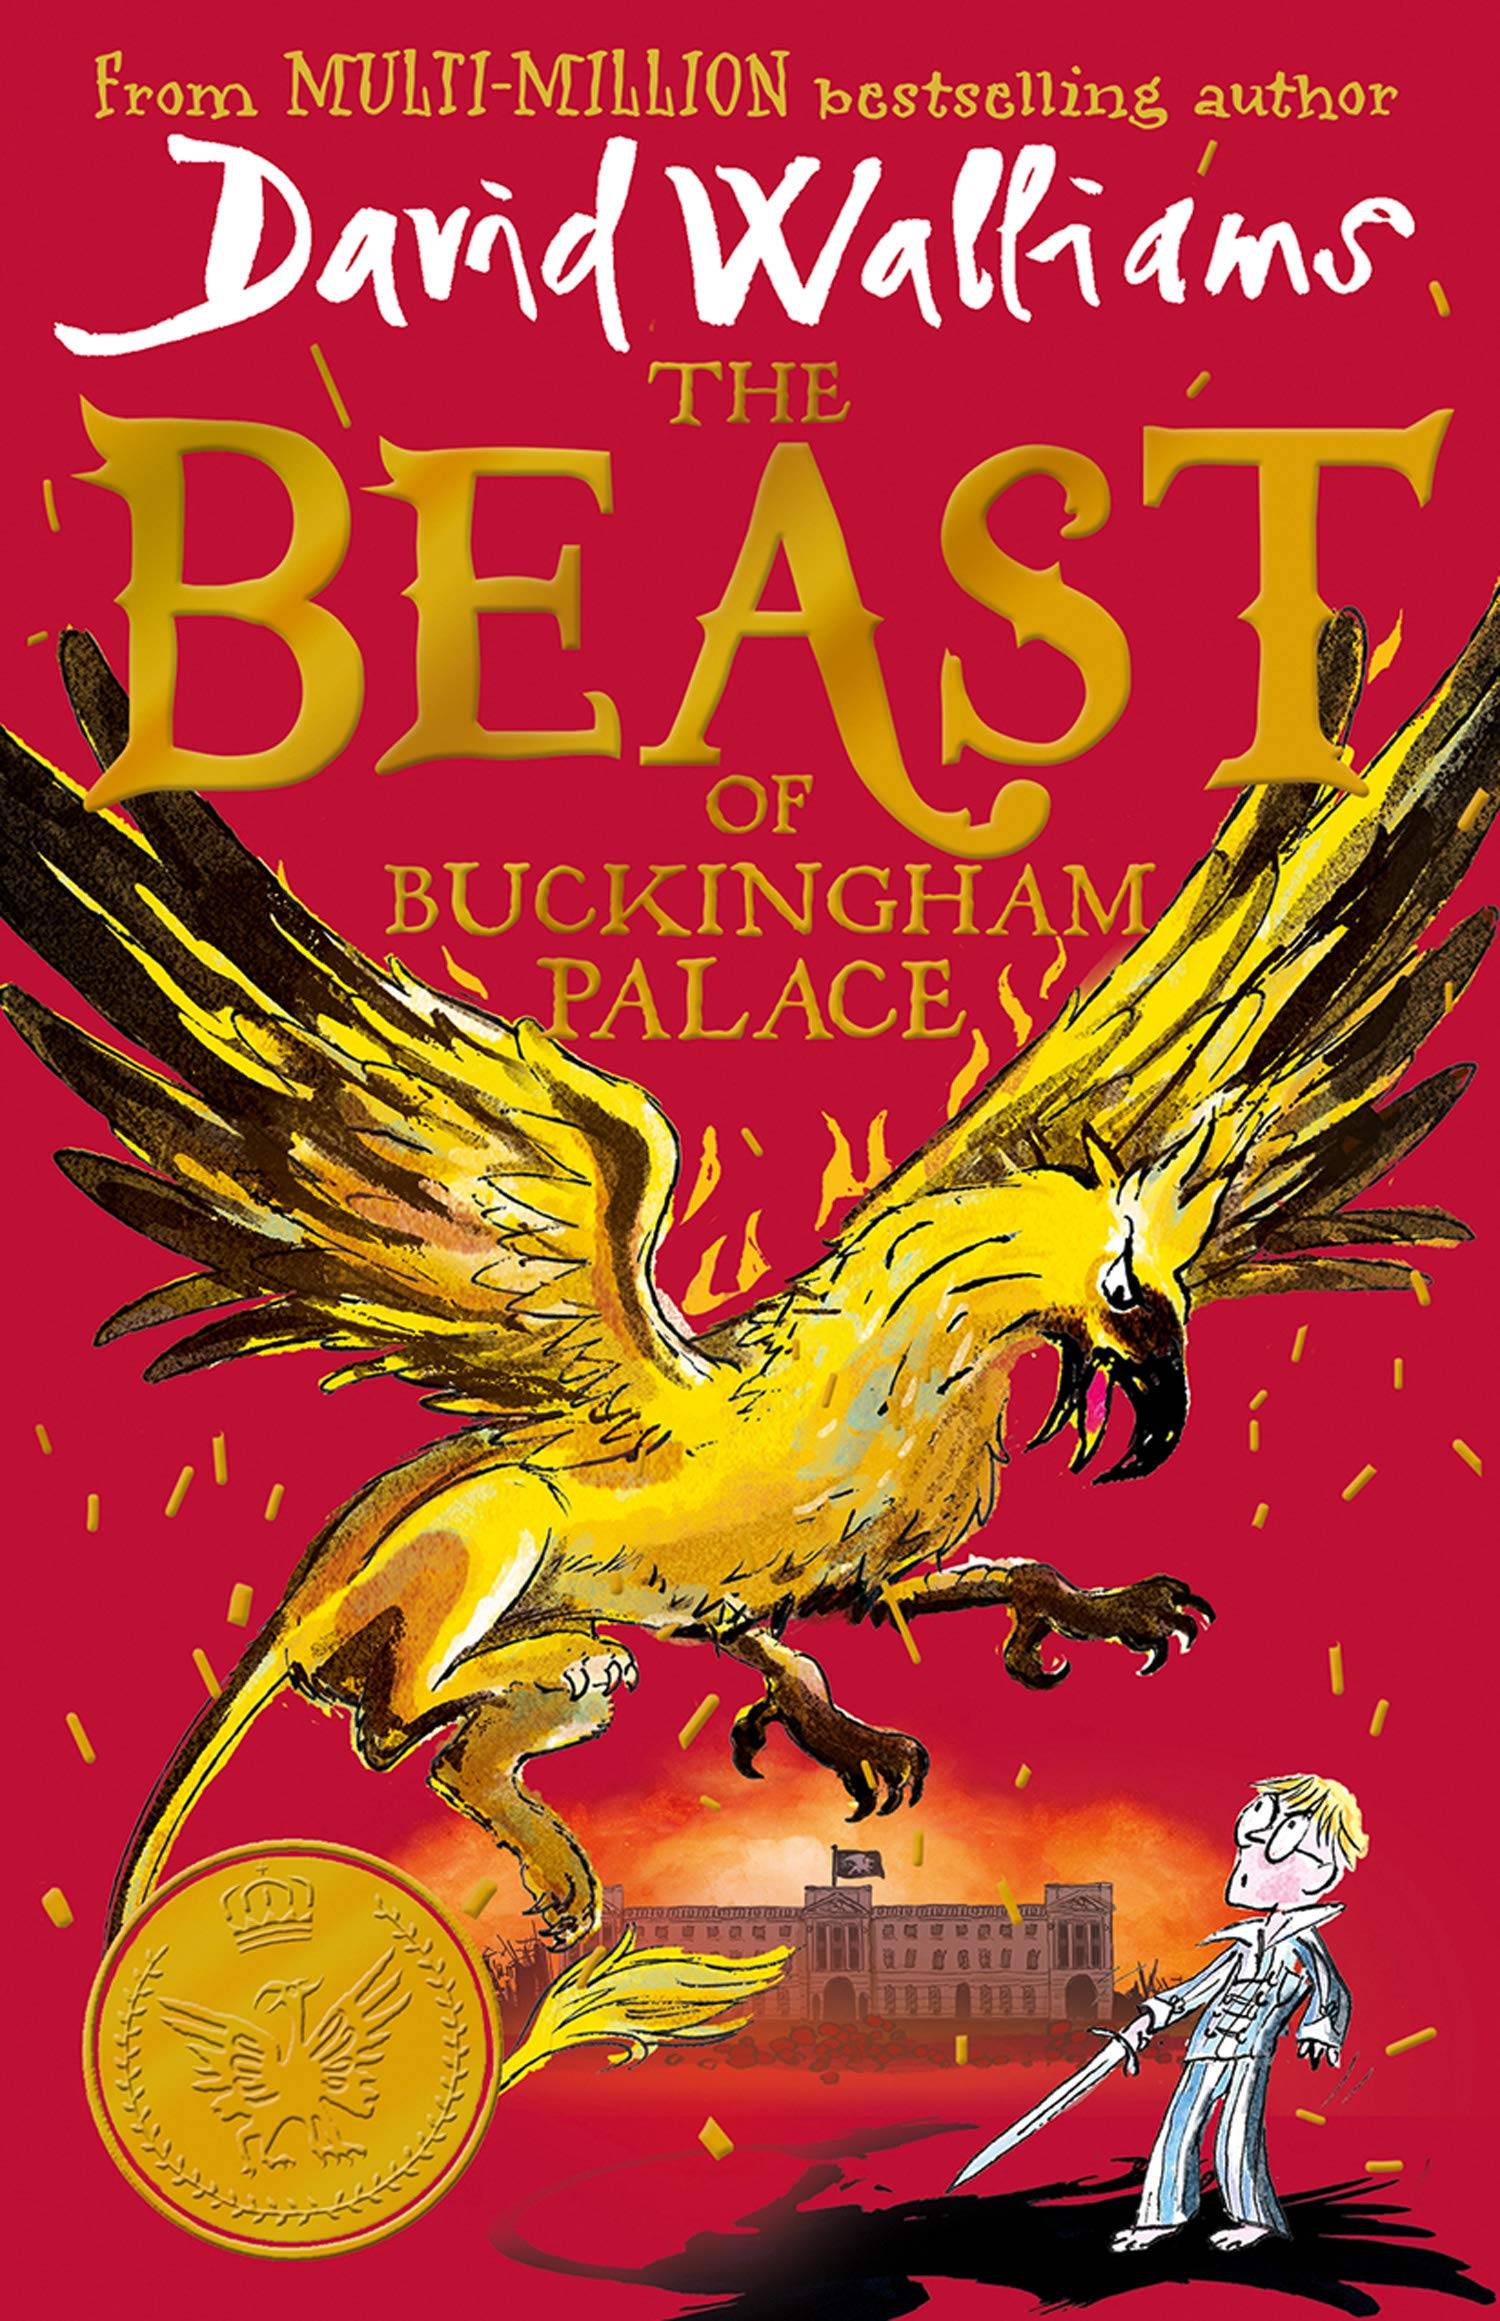 IMG : The Beast of the Buckingham Palace